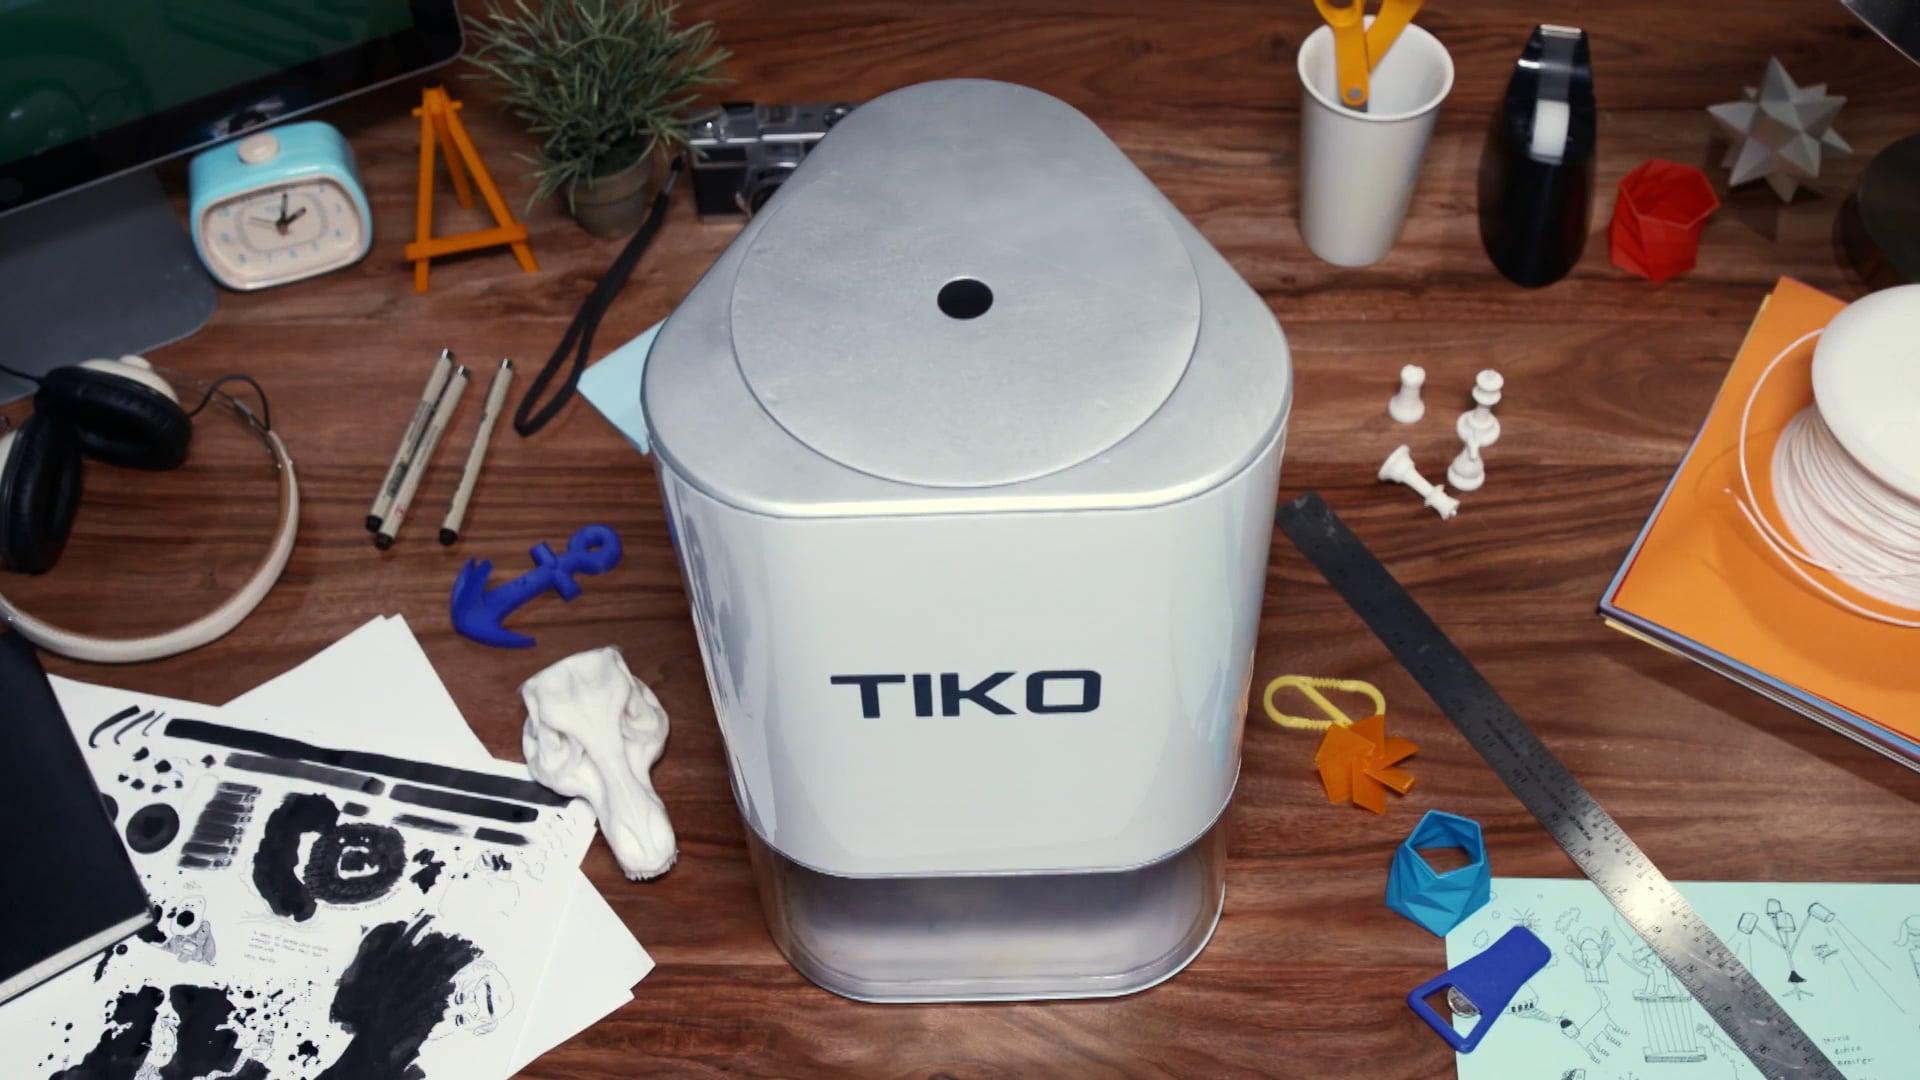 Tiko equipment